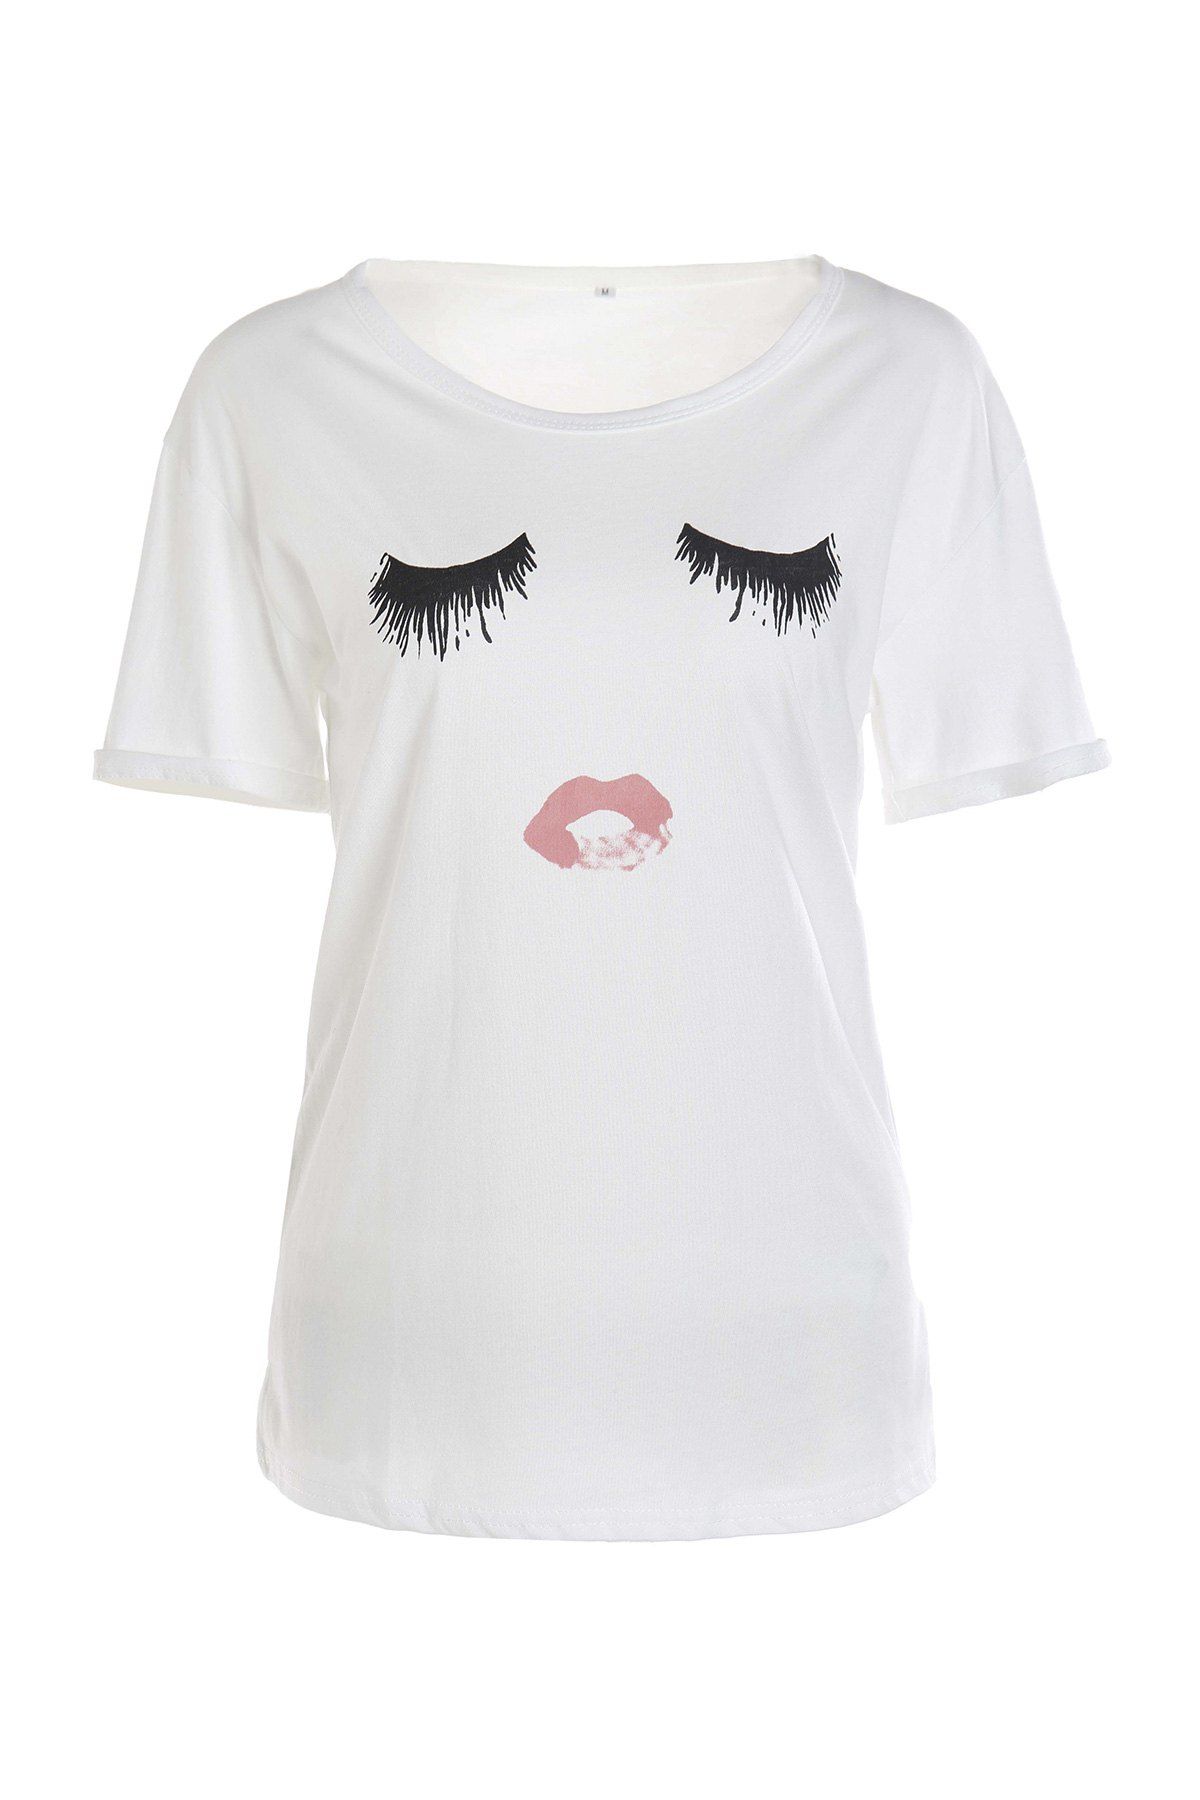 Hot Fashionable Jewel Neck Eyelash Lip Print Short Sleeve T-Shirt For Women  